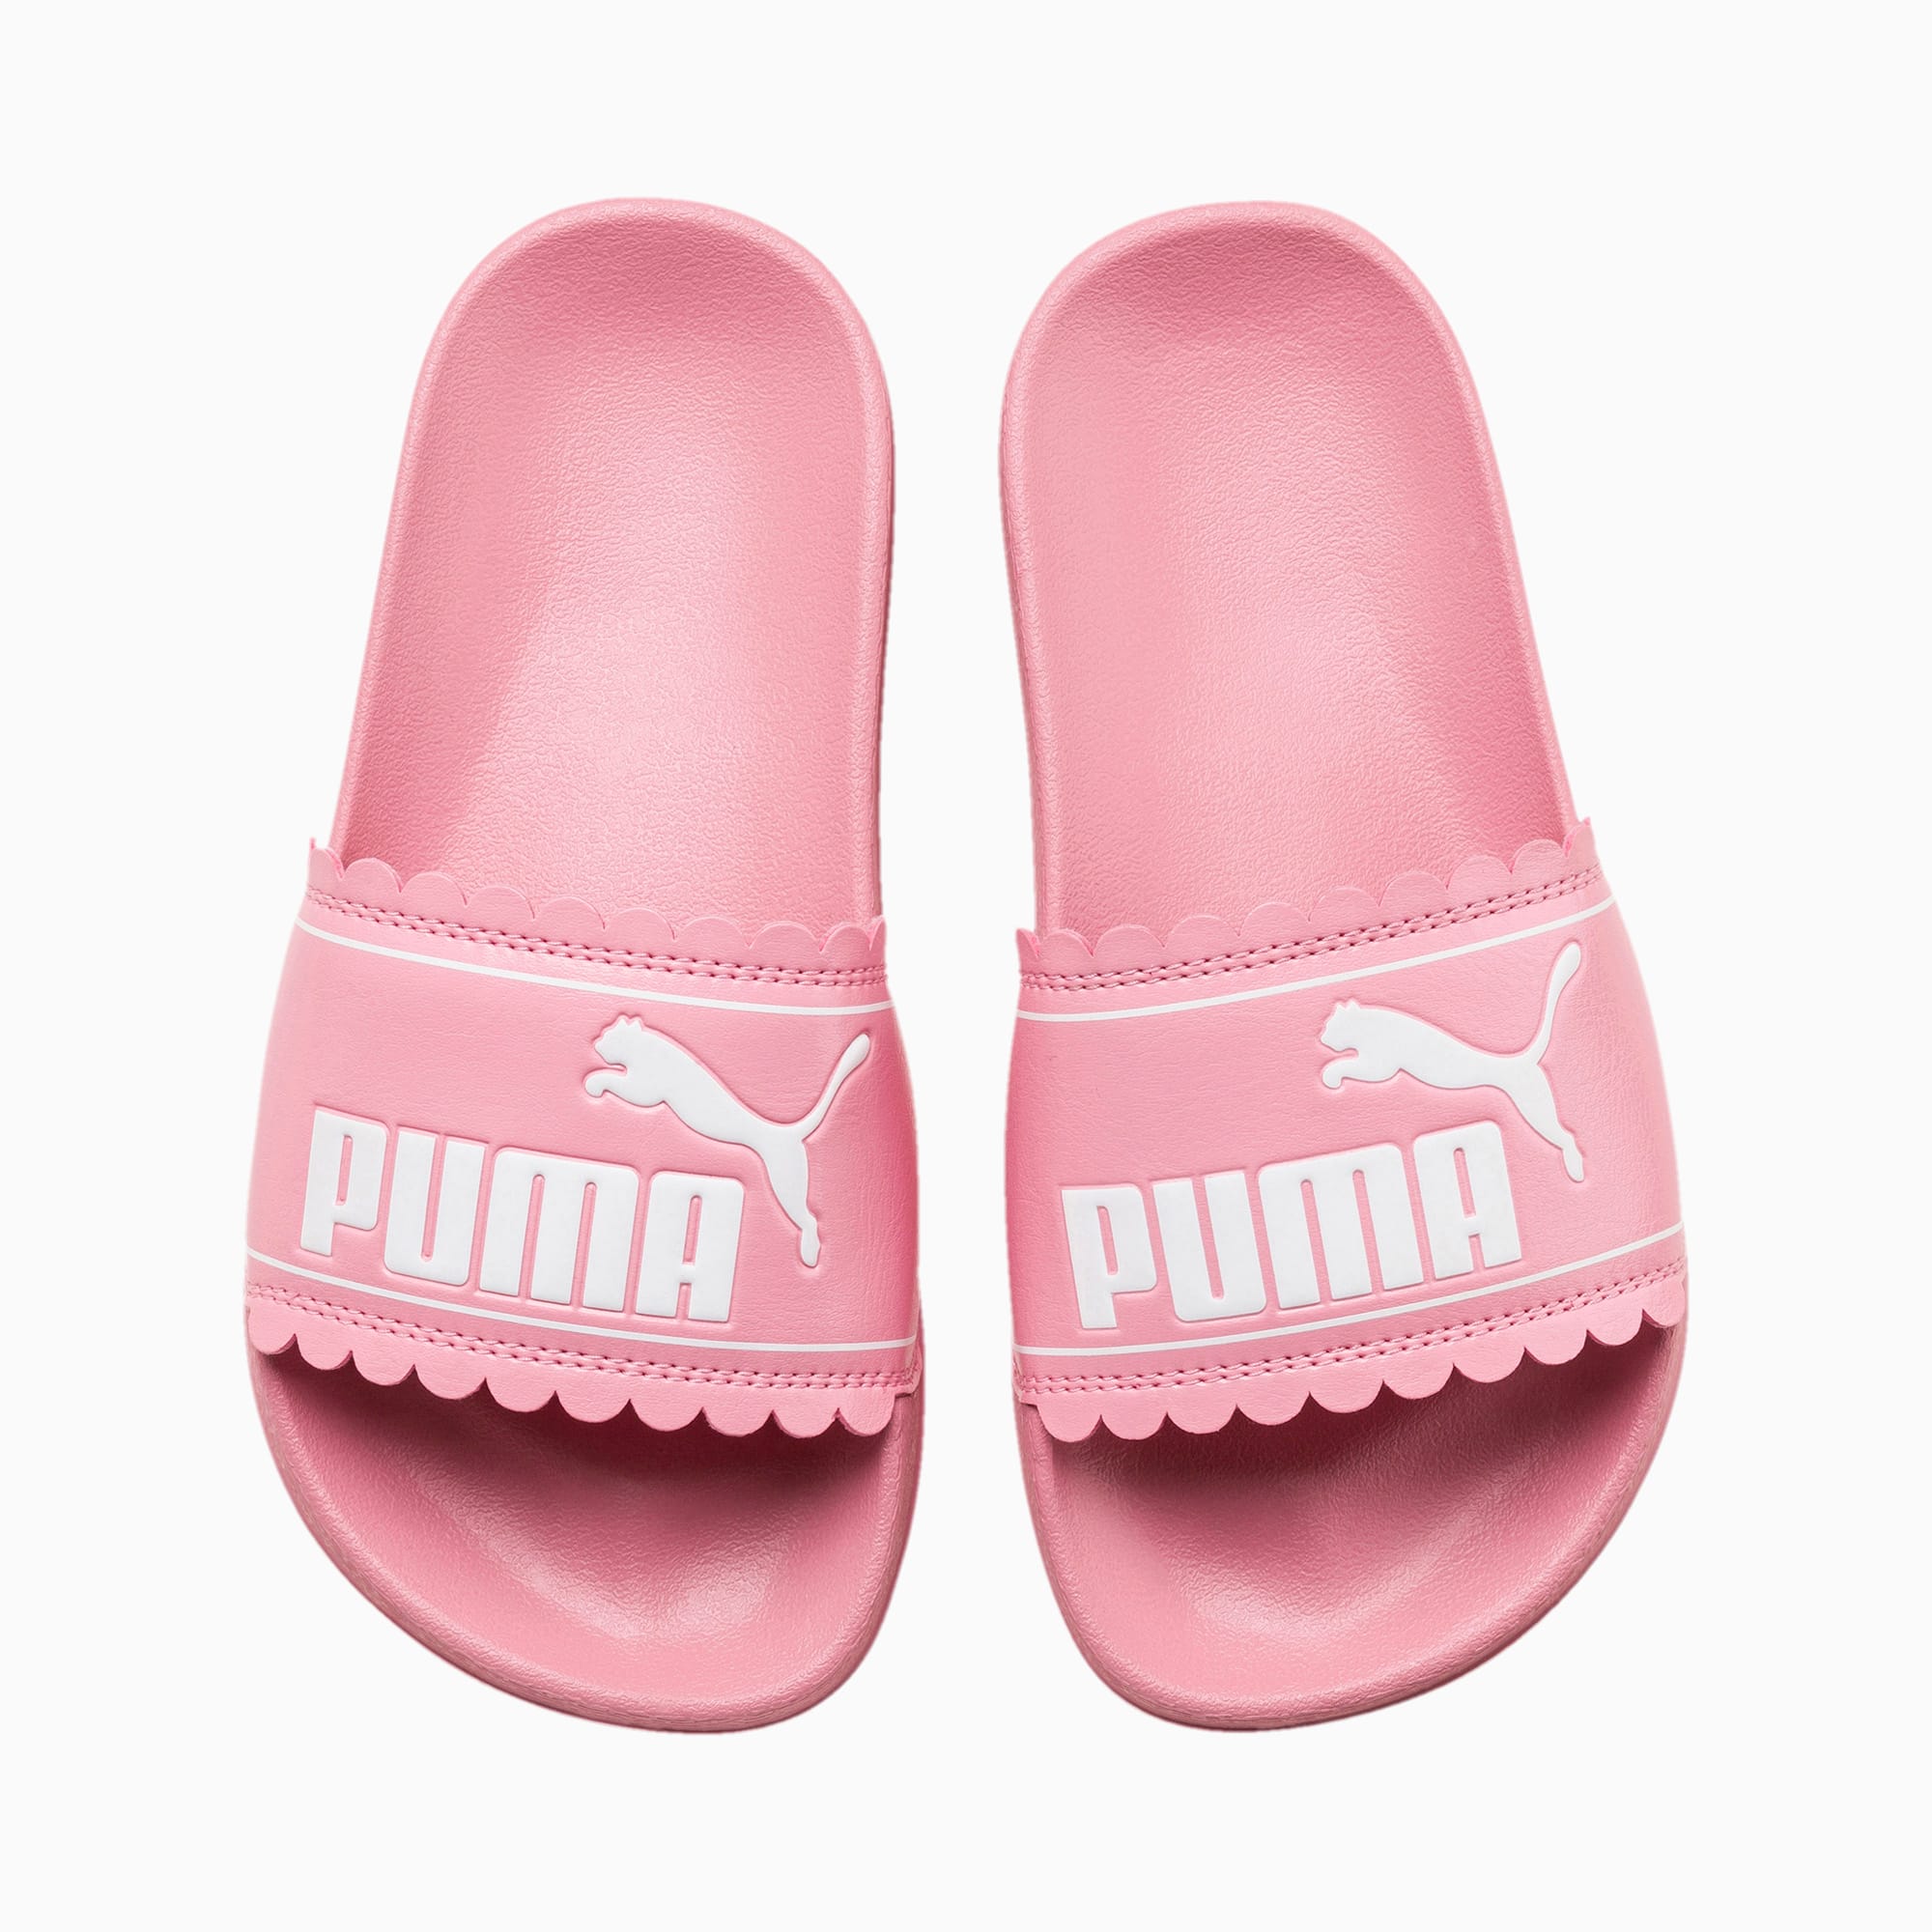 puma slides toddler